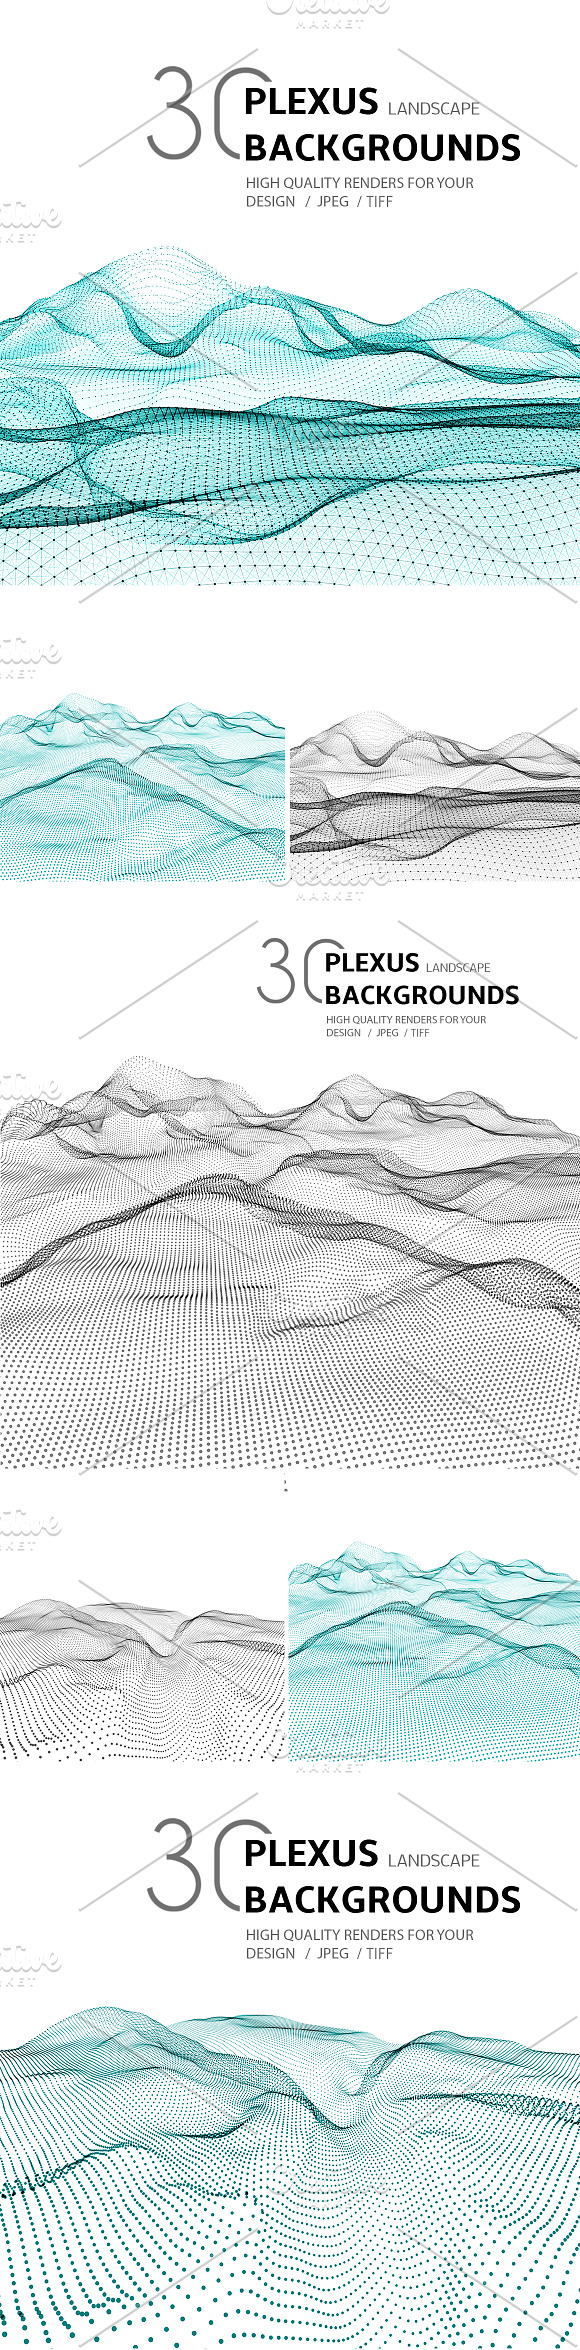 30 PLEXUS LANDSCAPE BACKGROUNDS  in Illustrations - product preview 1